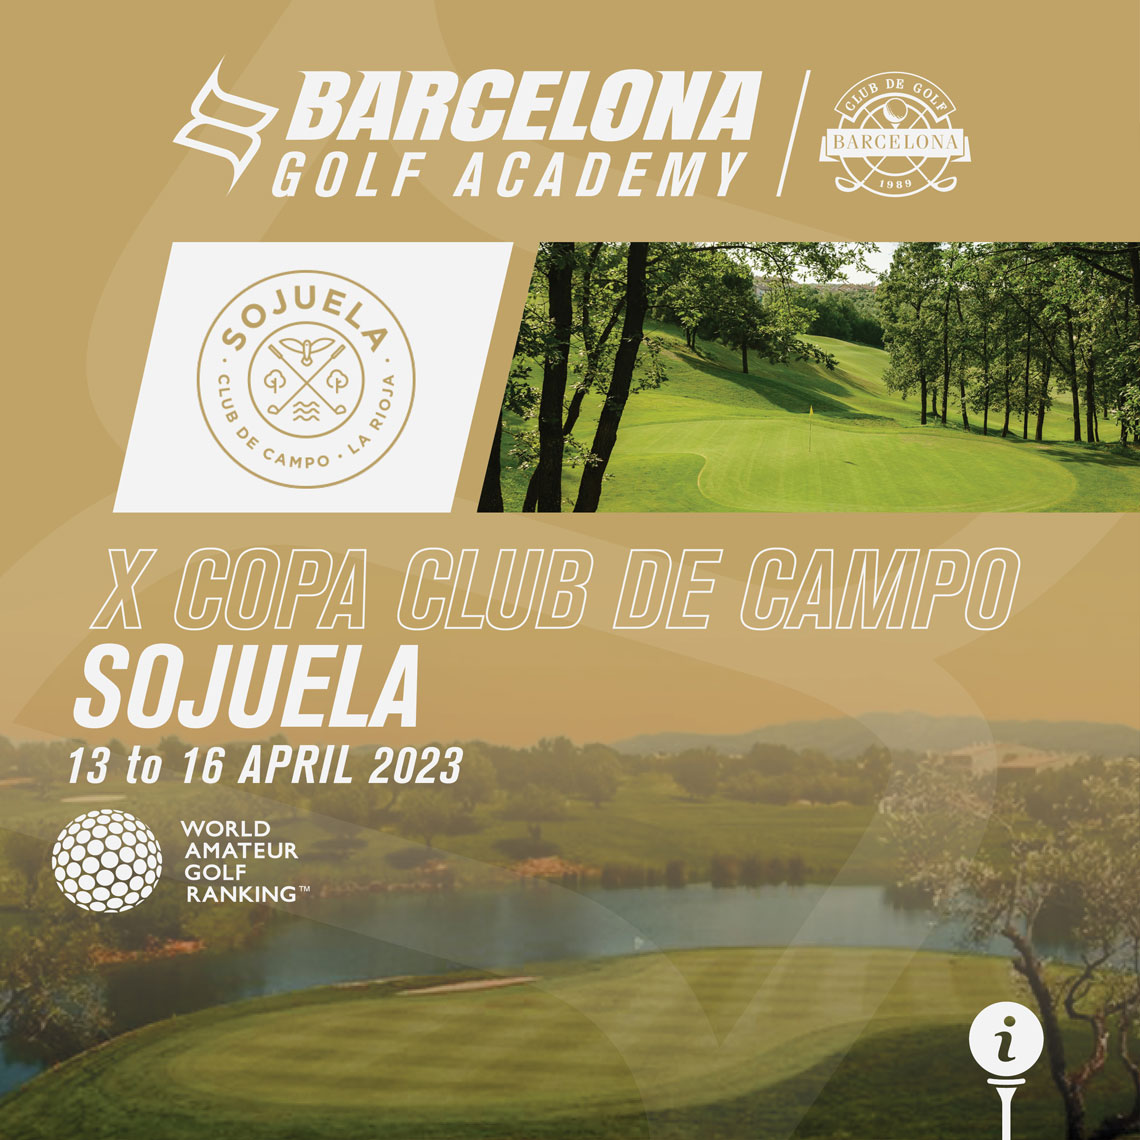 X COPA CLUB DE CAMPO - CLUB DE CAMPO SOJUELA | Barcelona Golf Academy